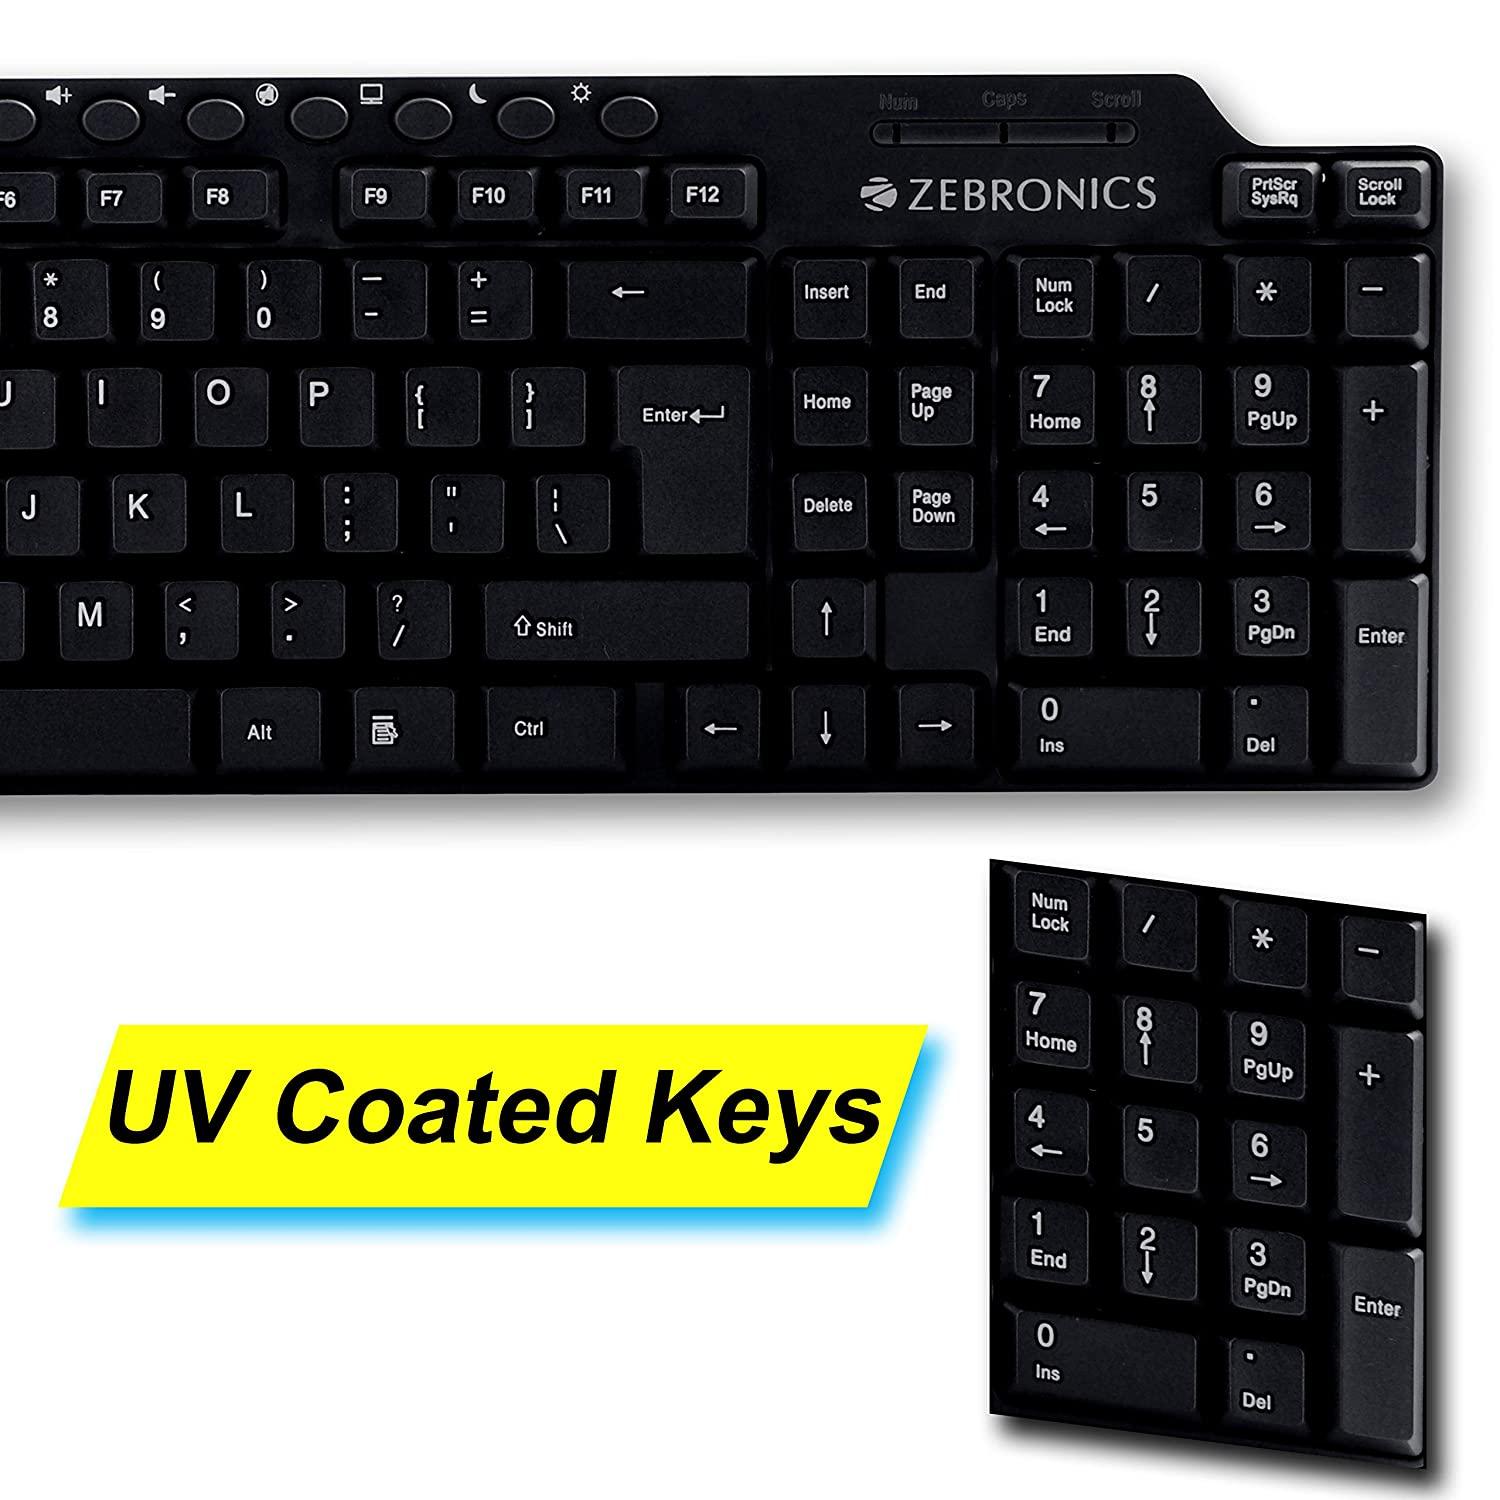 Zebronics ZEB-KM2100 Multimedia USB Keyboard Comes with 114 Keys Including 12 Dedicated Multimedia Keys & with Rupee Key - A - onBeli